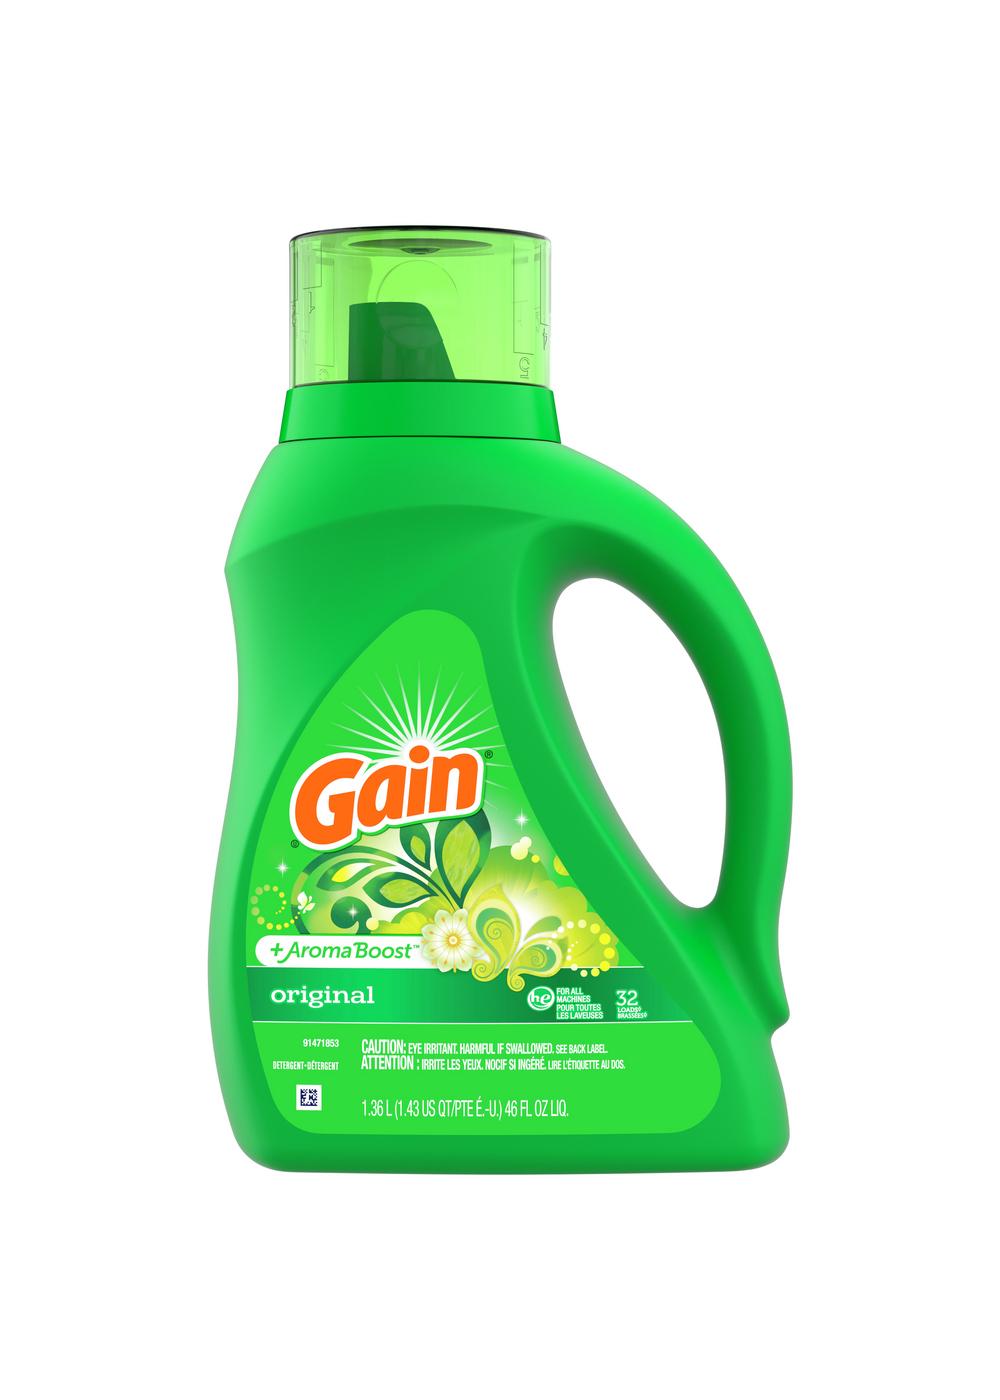 Gain + Aroma Boost HE Liquid Laundry Detergent, 32 Loads - Original; image 8 of 9